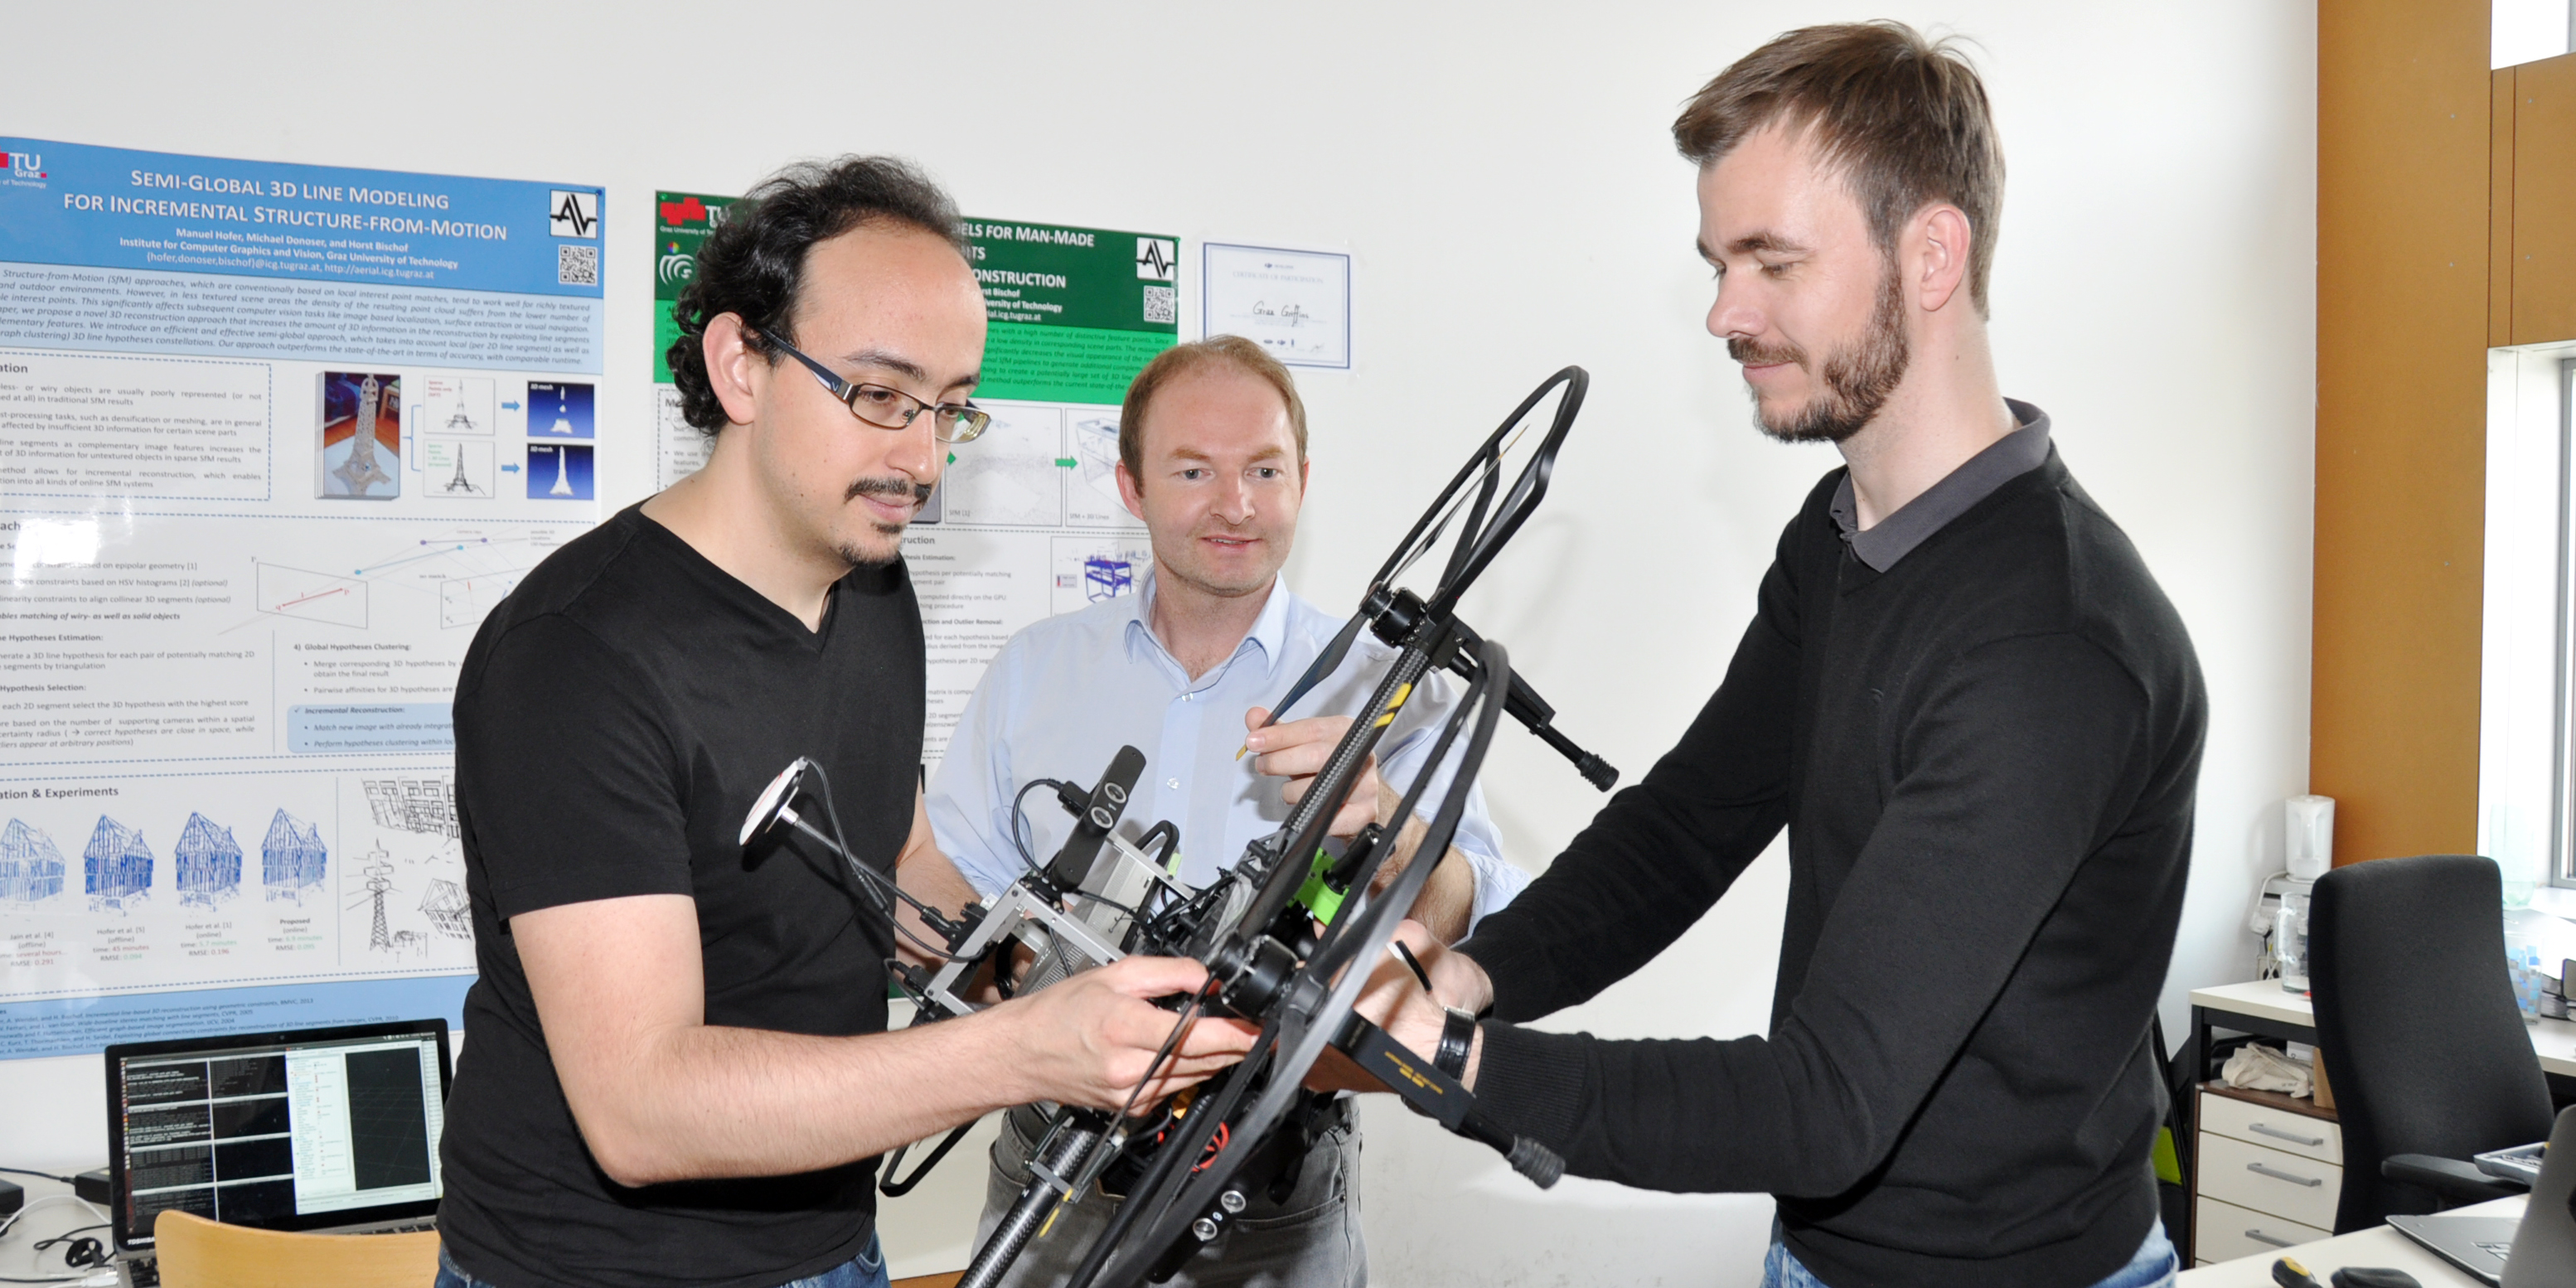 f.l.t.r.: Jesus Pestana Puerta, Friedrich Fraundorfer and Michael Maurer are preparing the drone for the next flight.